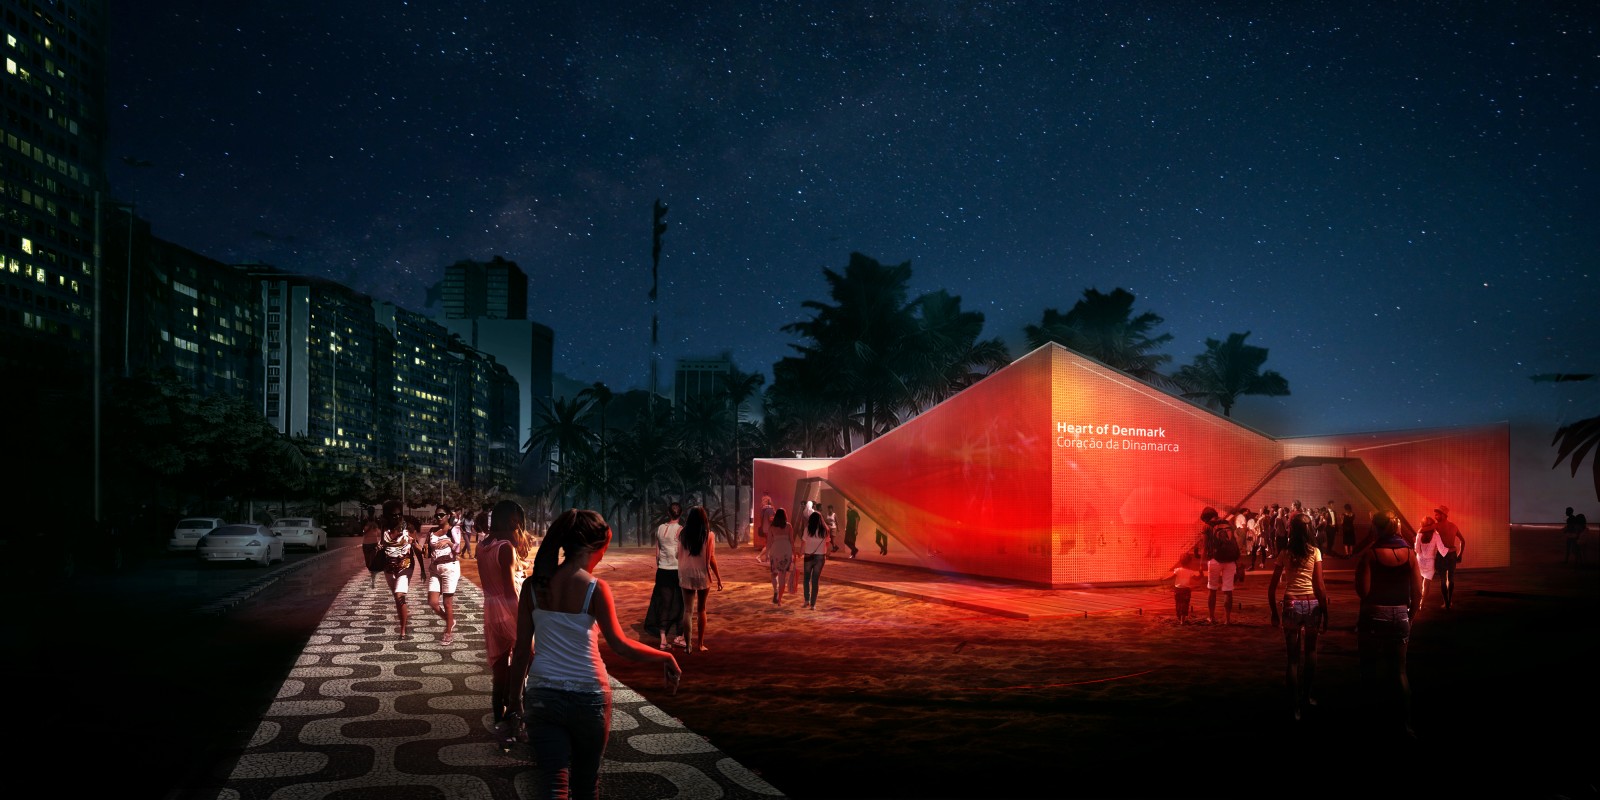 Denmark’s Pavilion at Ipanema Beach